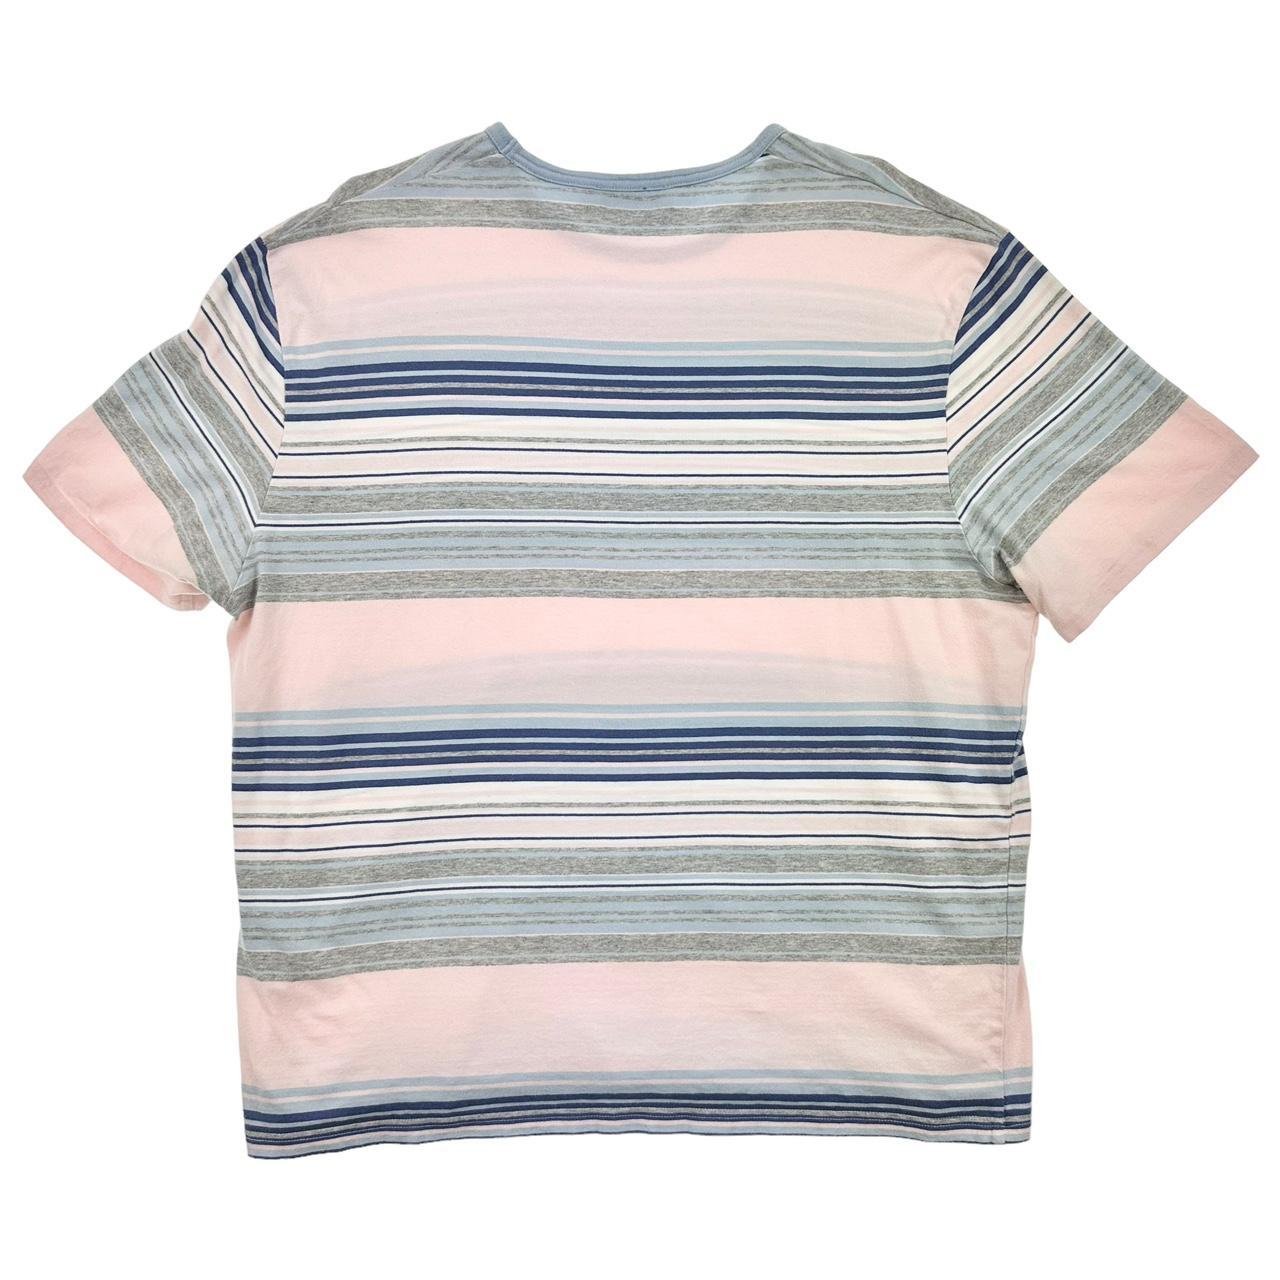 YSL Yves Saint Laurent striped t shirt size L - second wave